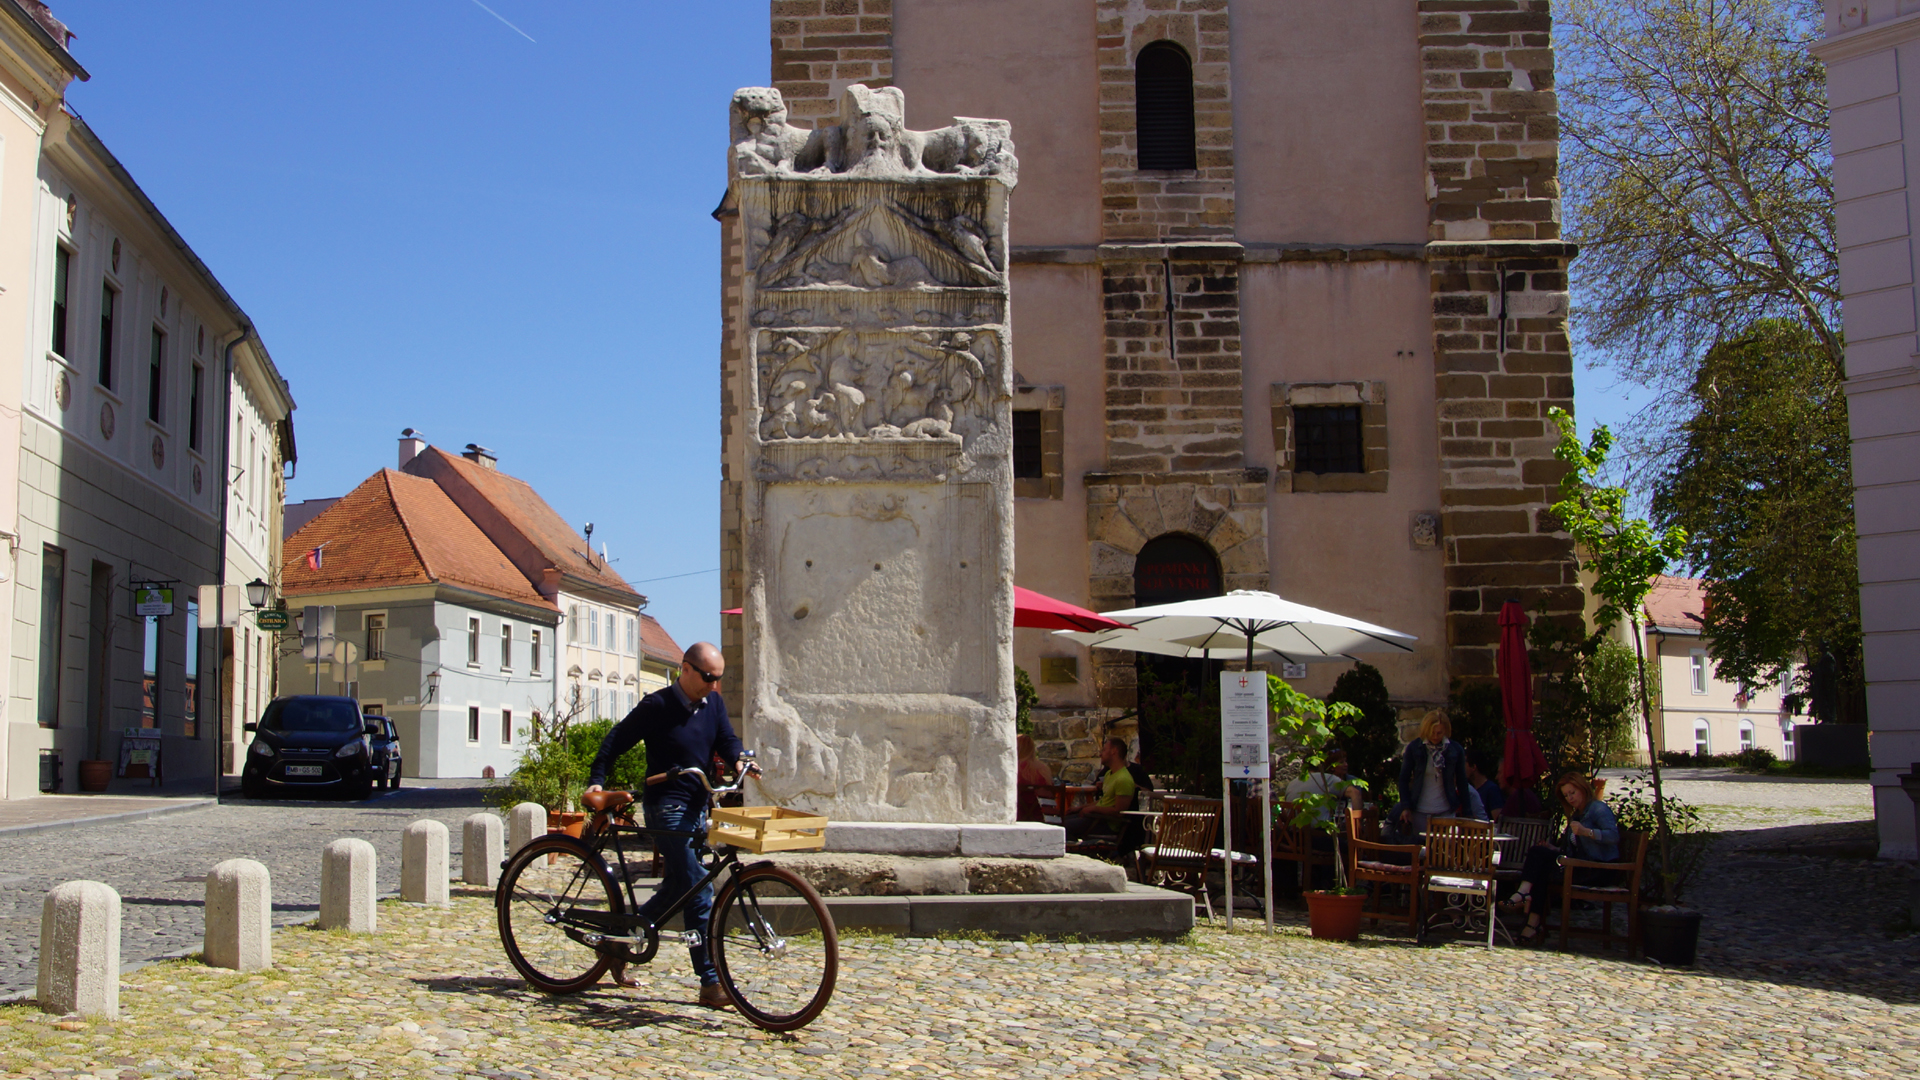 Slowenien 31: Orpheusdenkmal im Zentrum der Altstadt von Ptuj